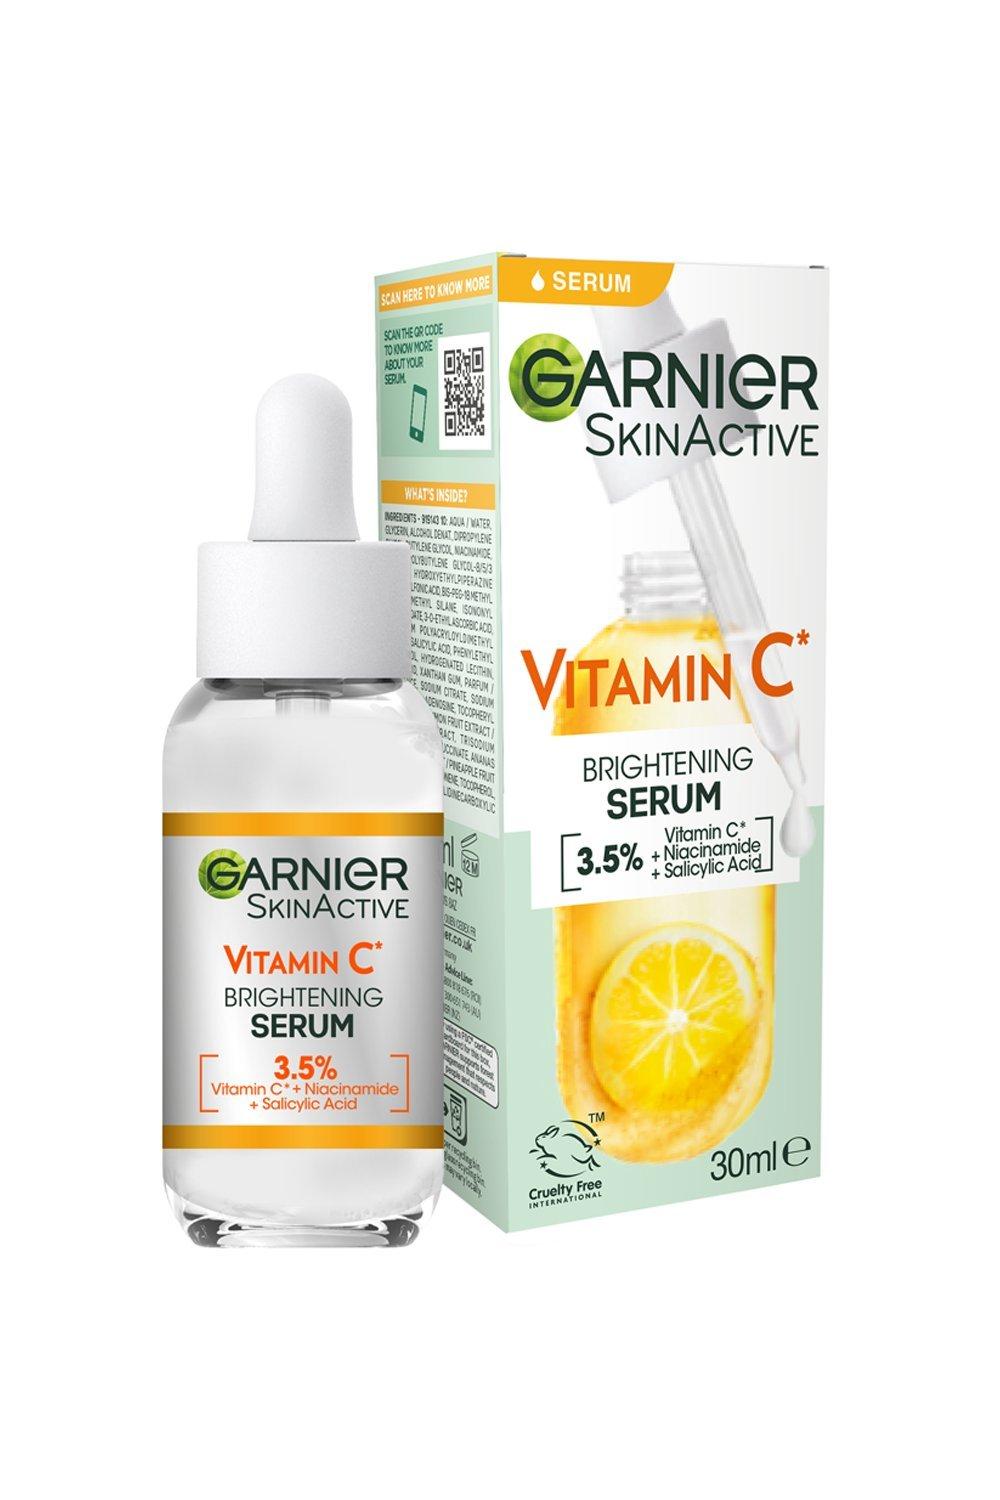 3.5% vitamin c, niacinamide, salicylic acid, brightening and anti dark spot serum